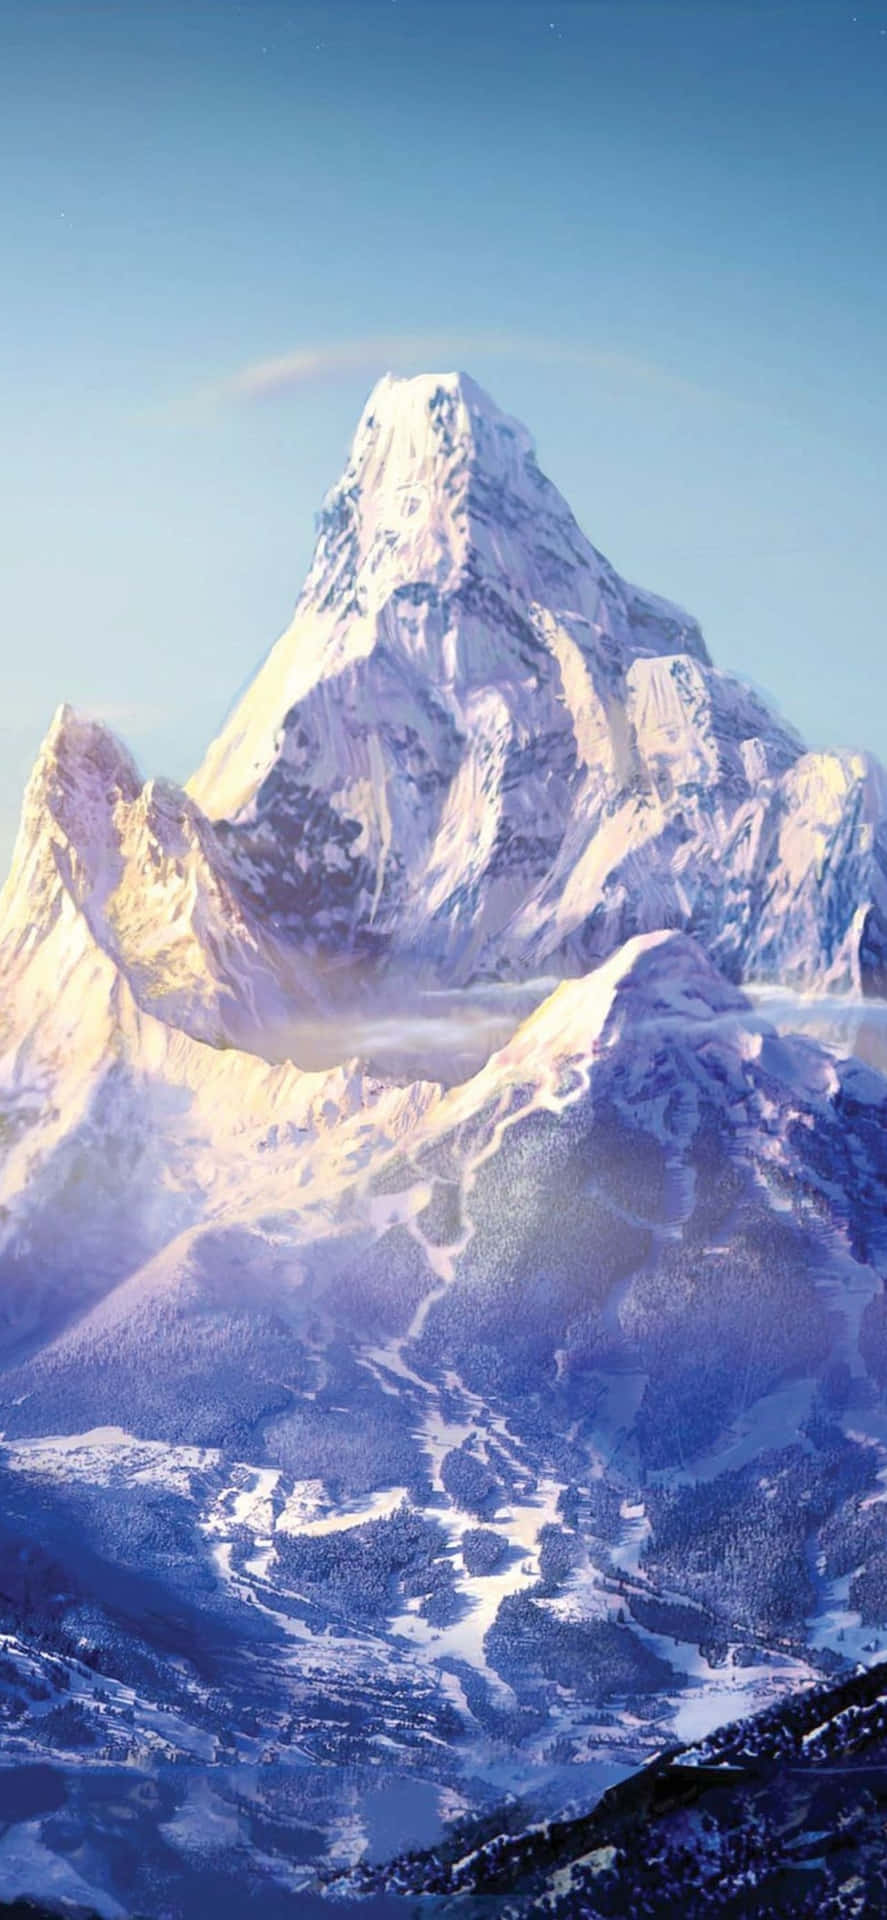 Caption: Majestic Mountain Landscape on Your iPhone